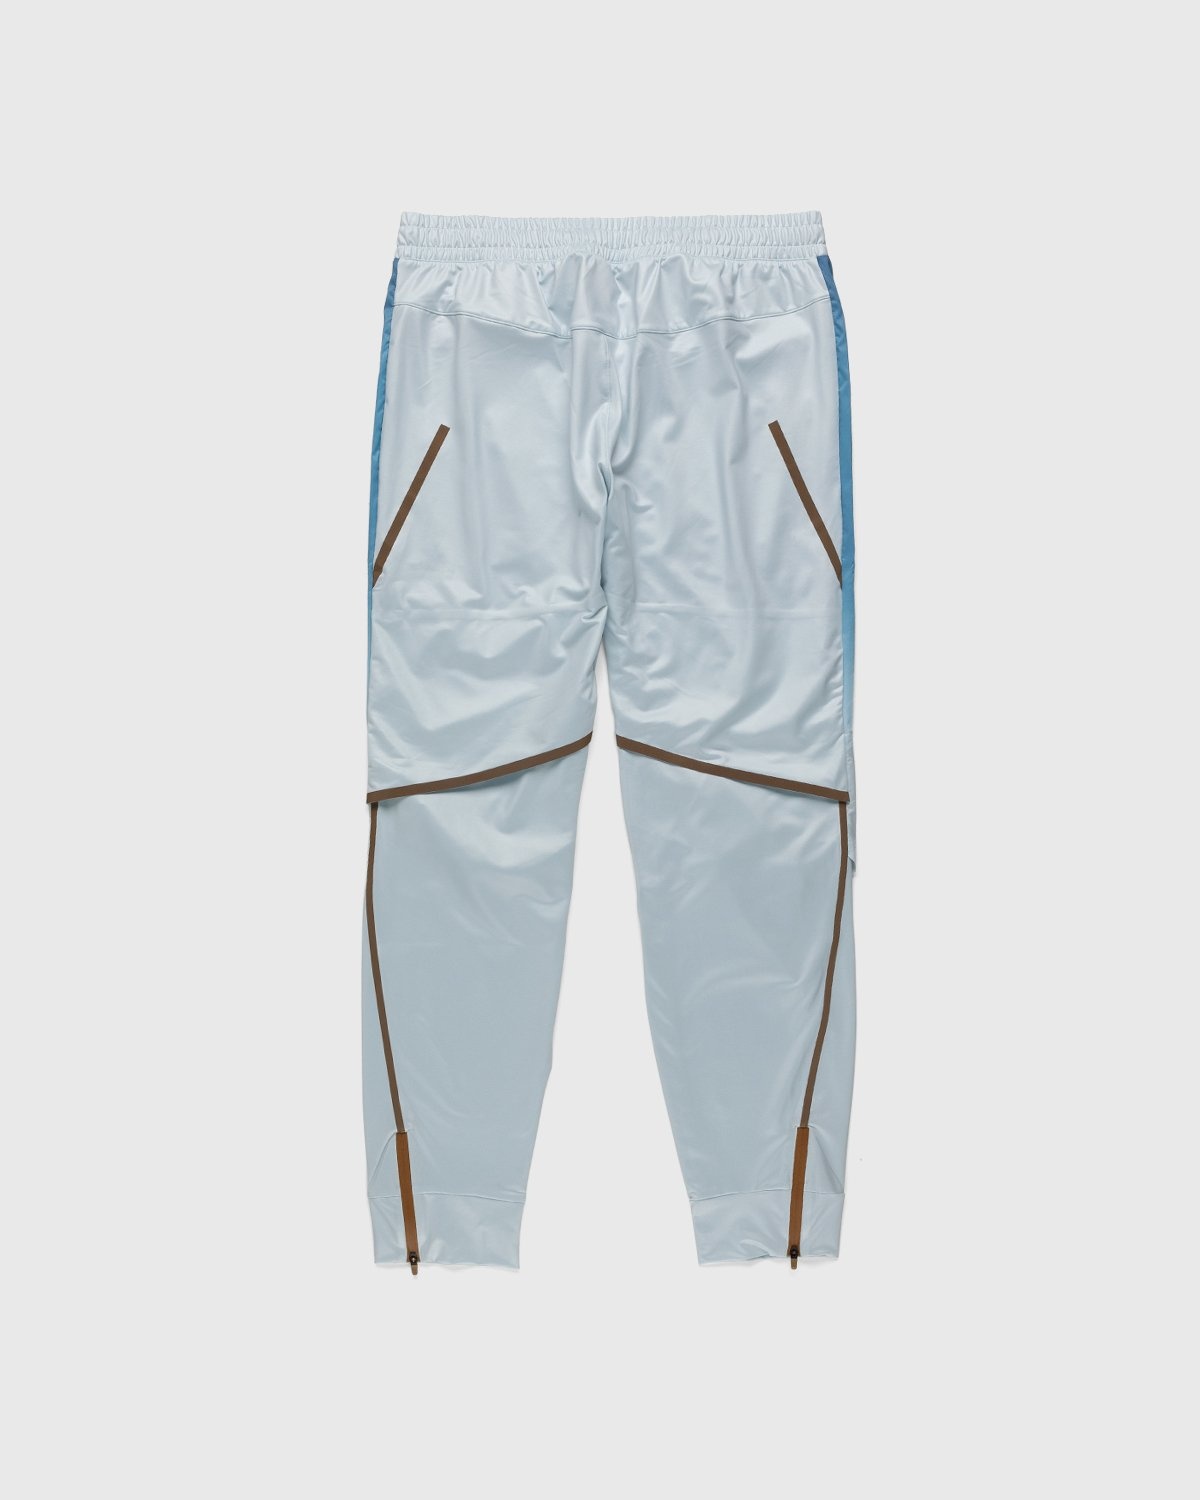 Loewe x On – Men's Technical Running Pants Gradient Grey - Pants - Blue - Image 2